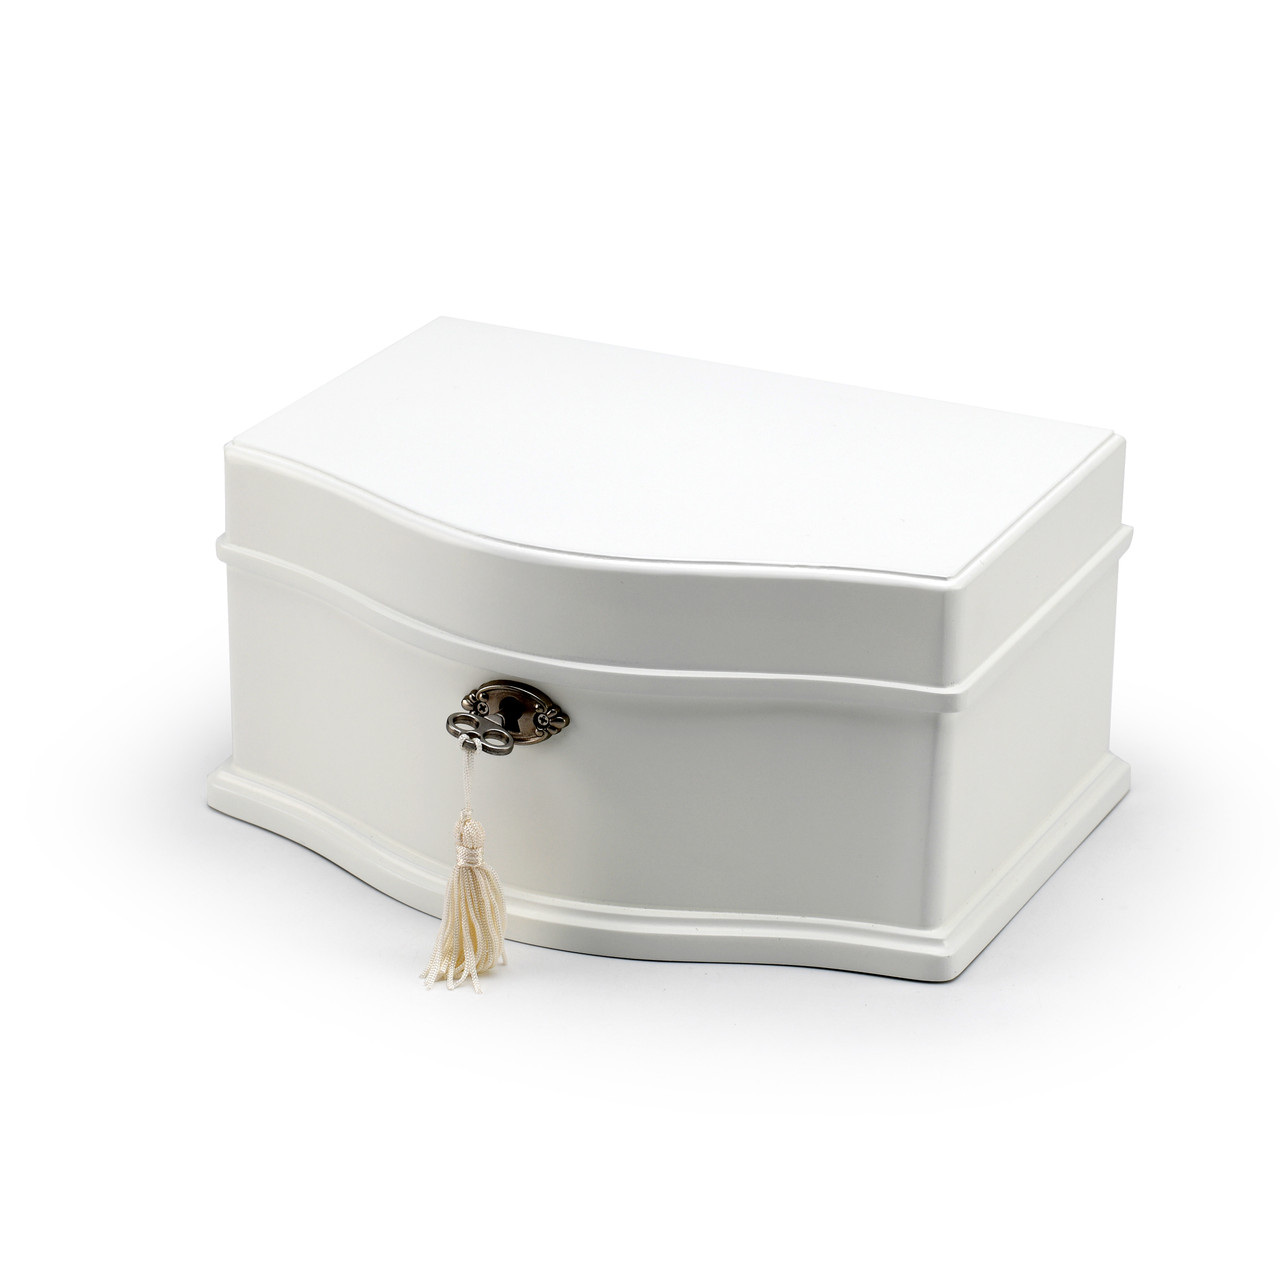 Image of Nostalgic 18 Note White Spinning Ballerina Musical Box with Lock and Key